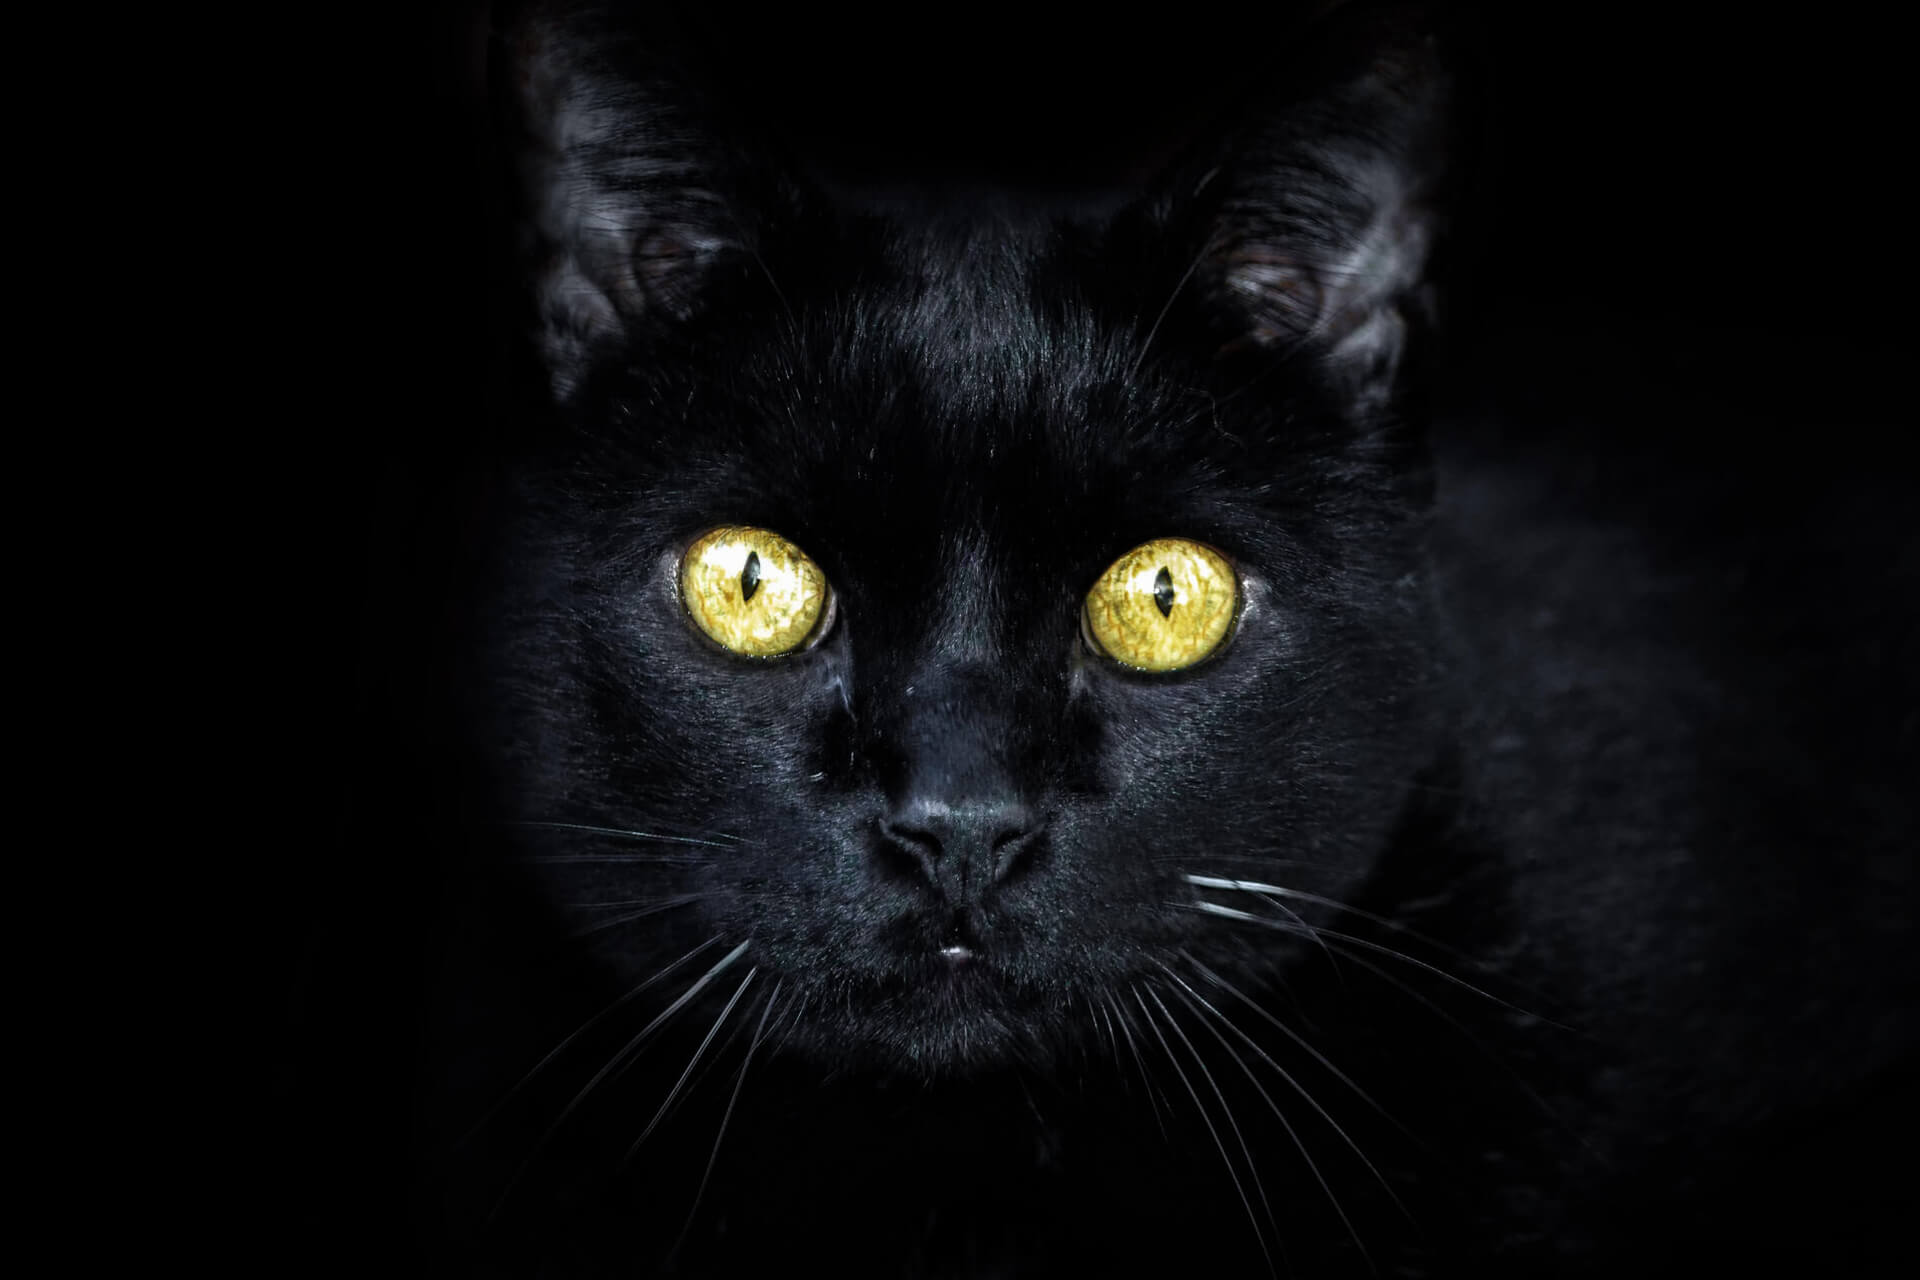 En Guzel Siyah Kara Kedi Isimleri Miyavliyo